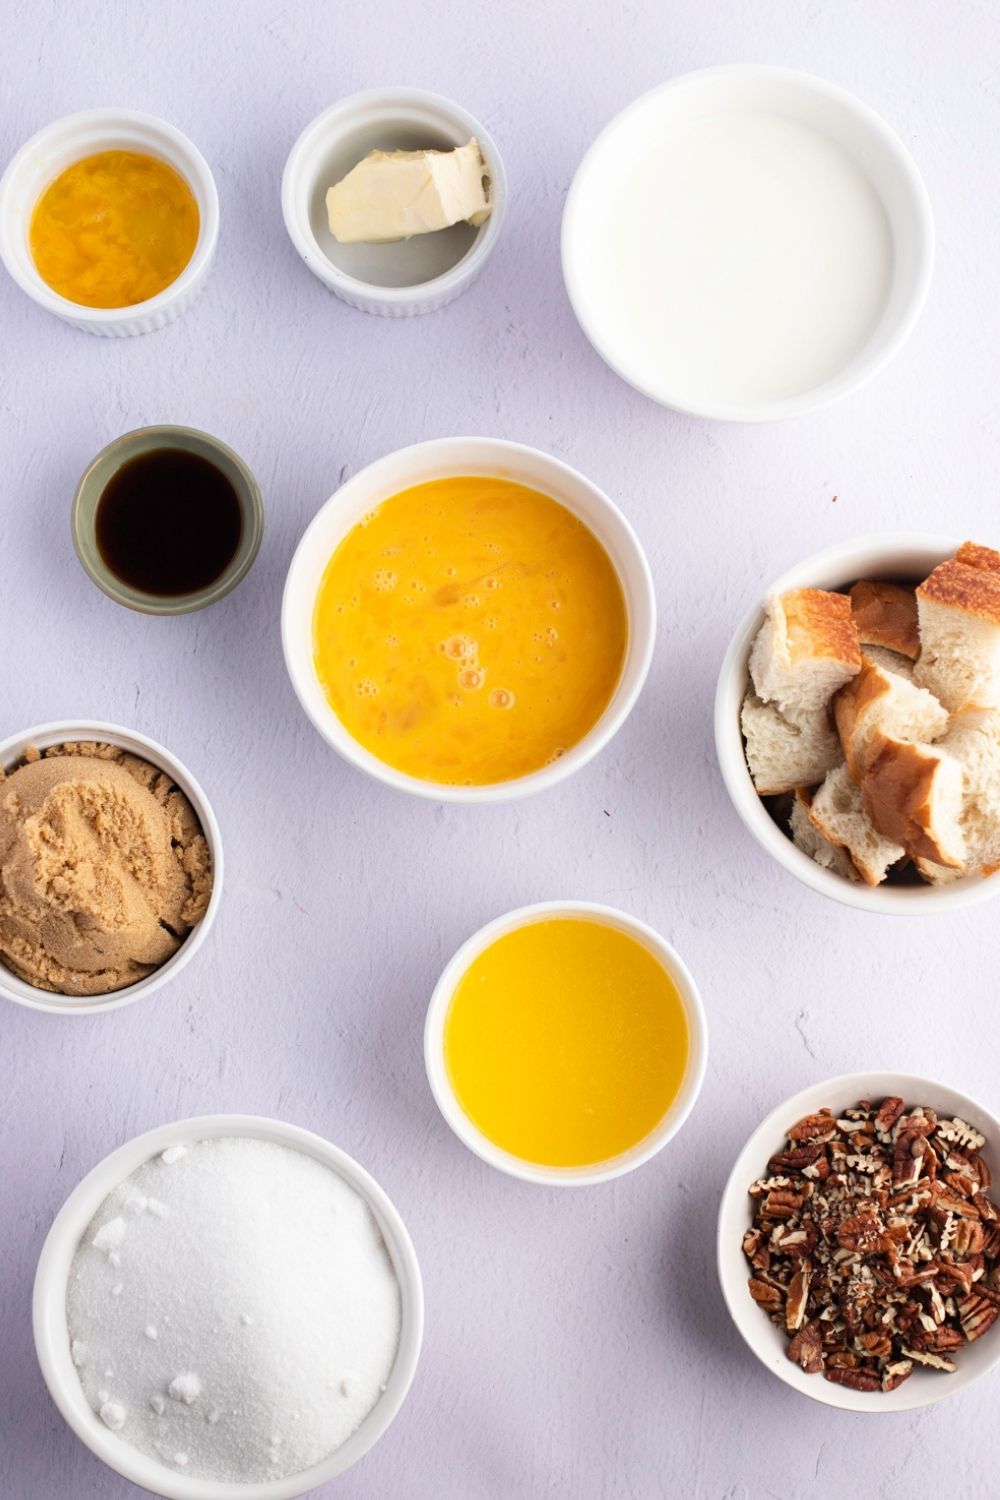 Paula Deen Bread Pudding Ingredients - Sugar, Eggs, Milk, Vanilla Extract, Bread, Butter and Pecans